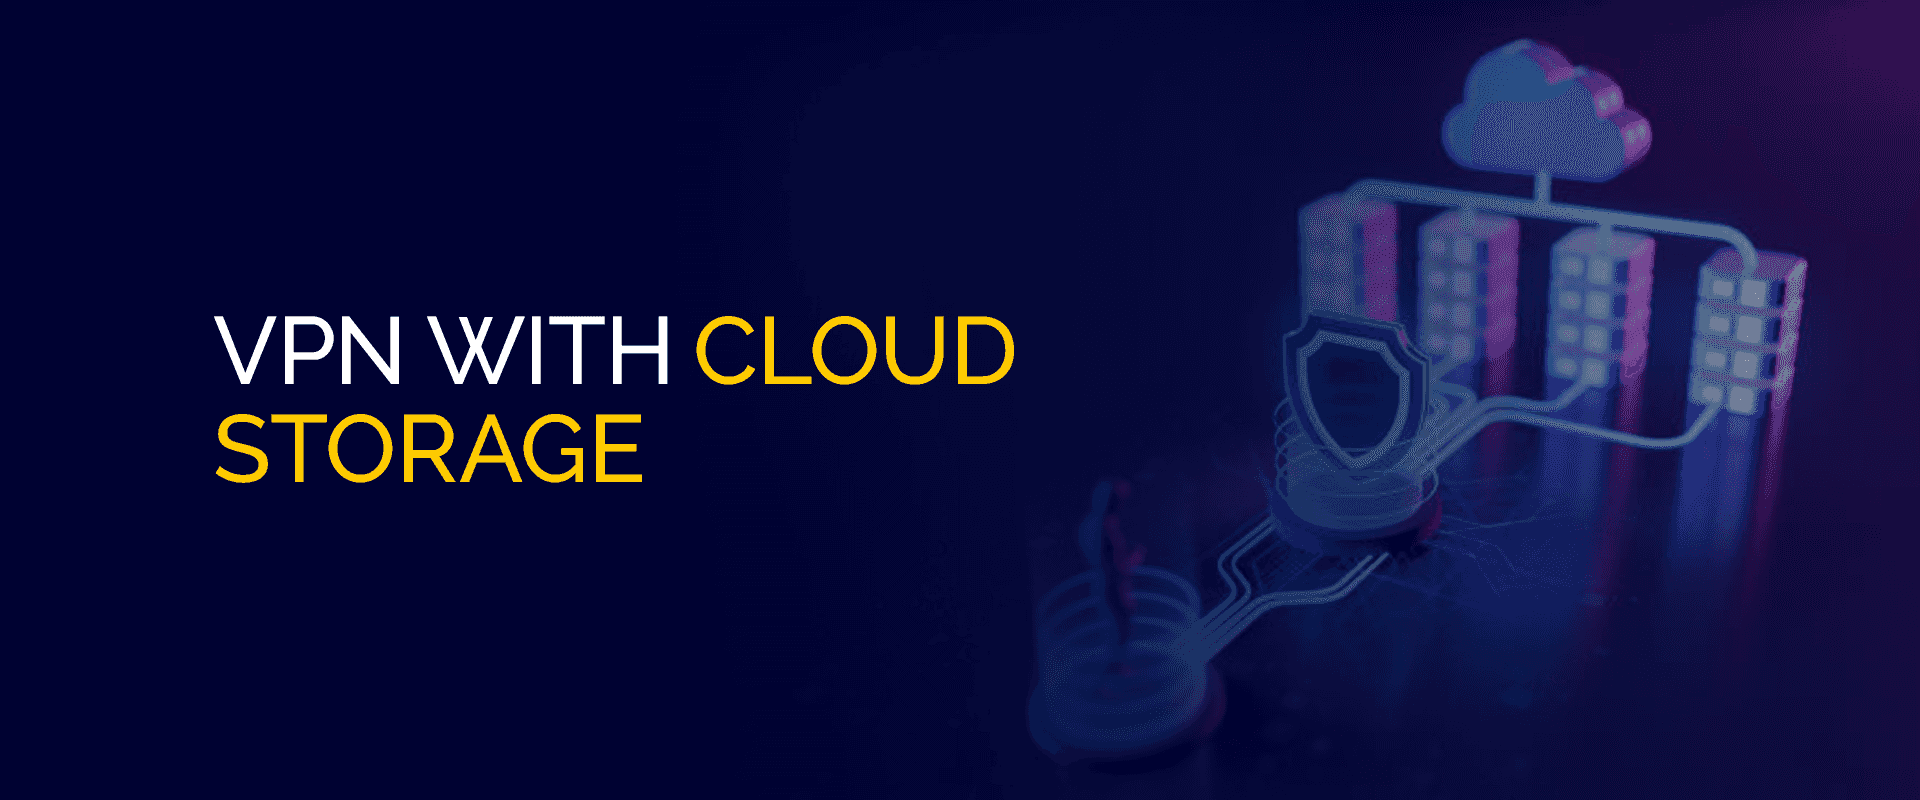 VPN with Cloud Storage